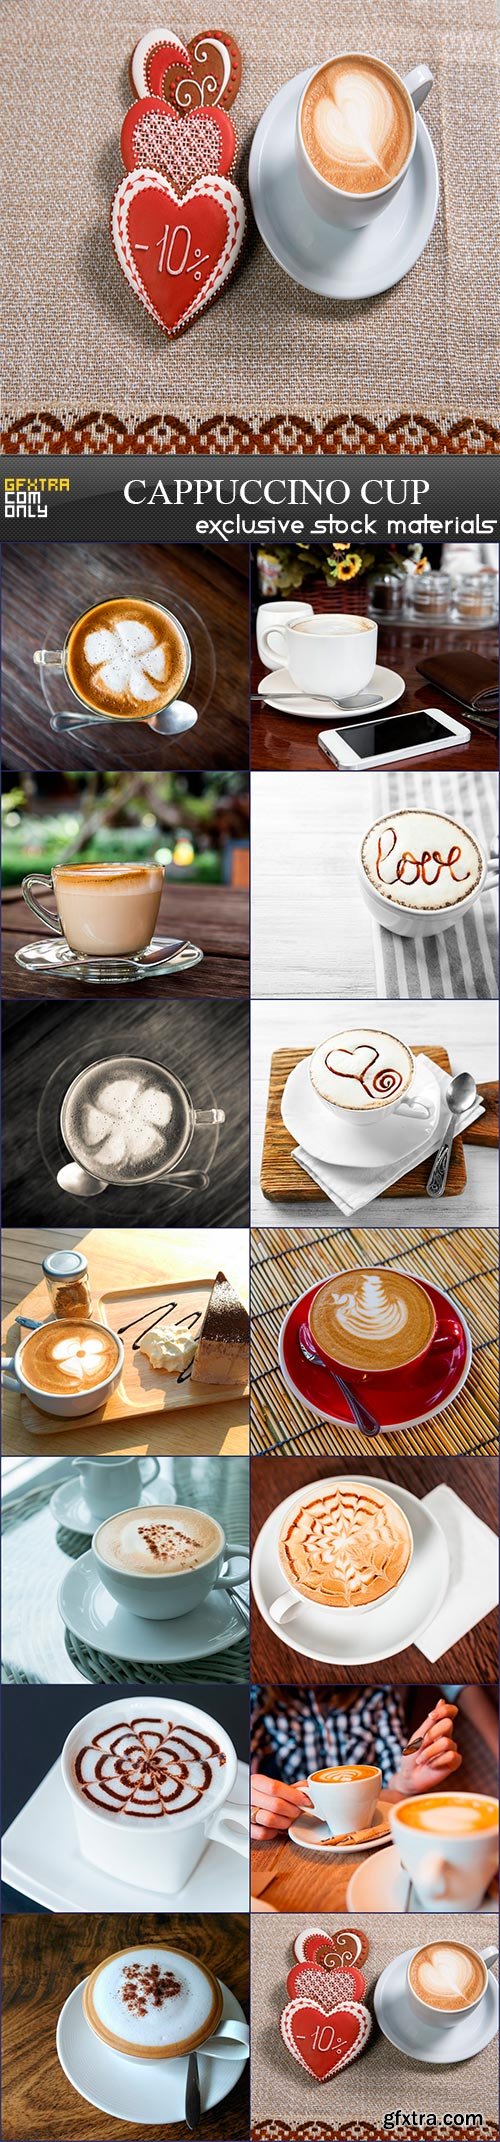 Cappuccino cup, 14 x UHQ JPEG